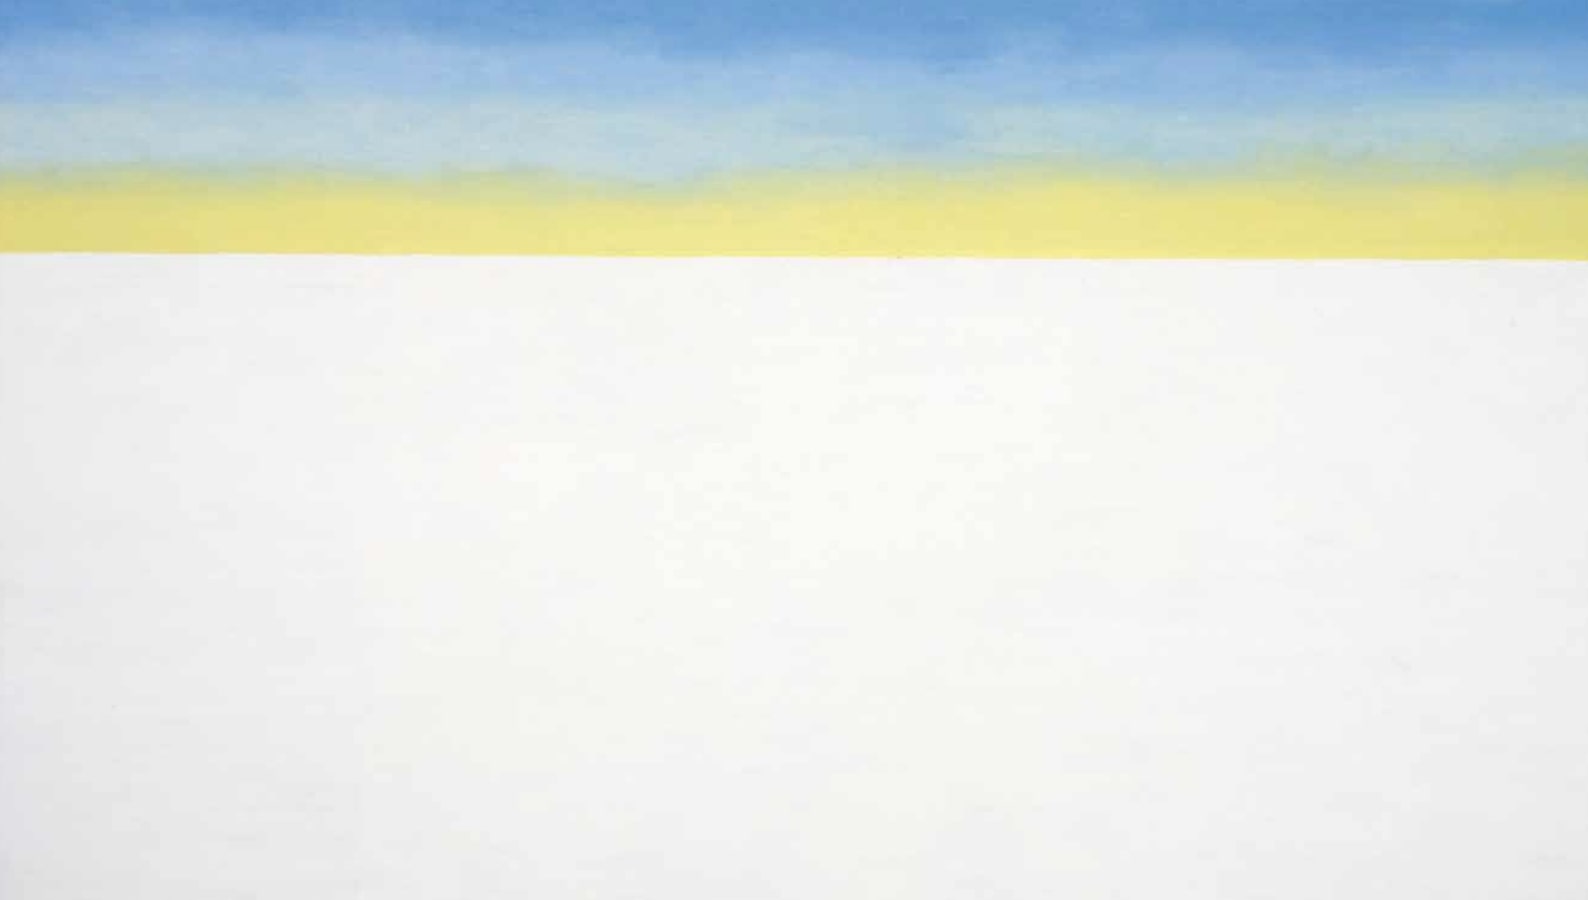 Georgia O’Keeffe: Sky Above Clouds – Yellow Horizon and Clouds, 1976–1977, olaj, vászon, 121,9 × 213,4 cm, Georgia O’Keeffe Museum, Santa Fe, © Georgia O’Keeffe Museum / Adagp, Paris, 2021 / HUNGART © 2021